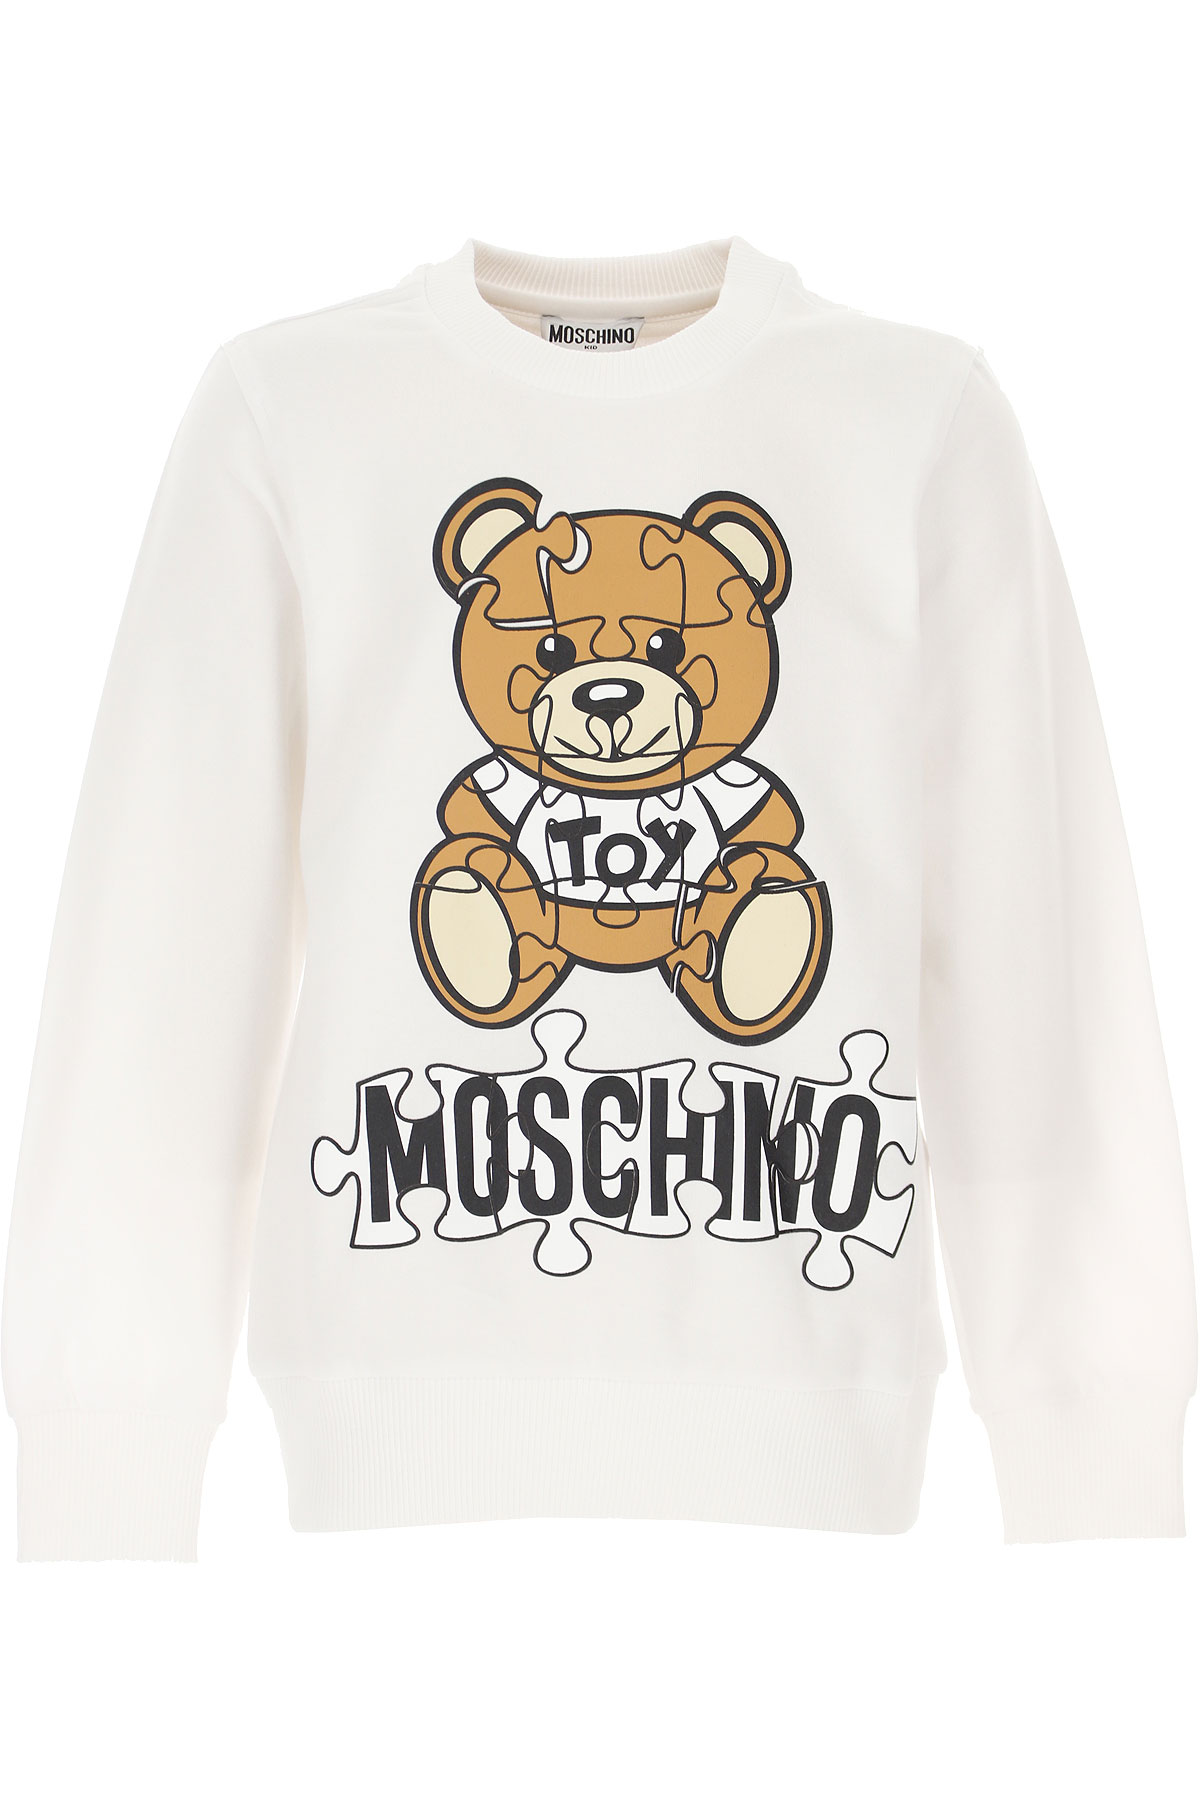 Kidswear Moschino, Style code: hqf039-lda14-10101